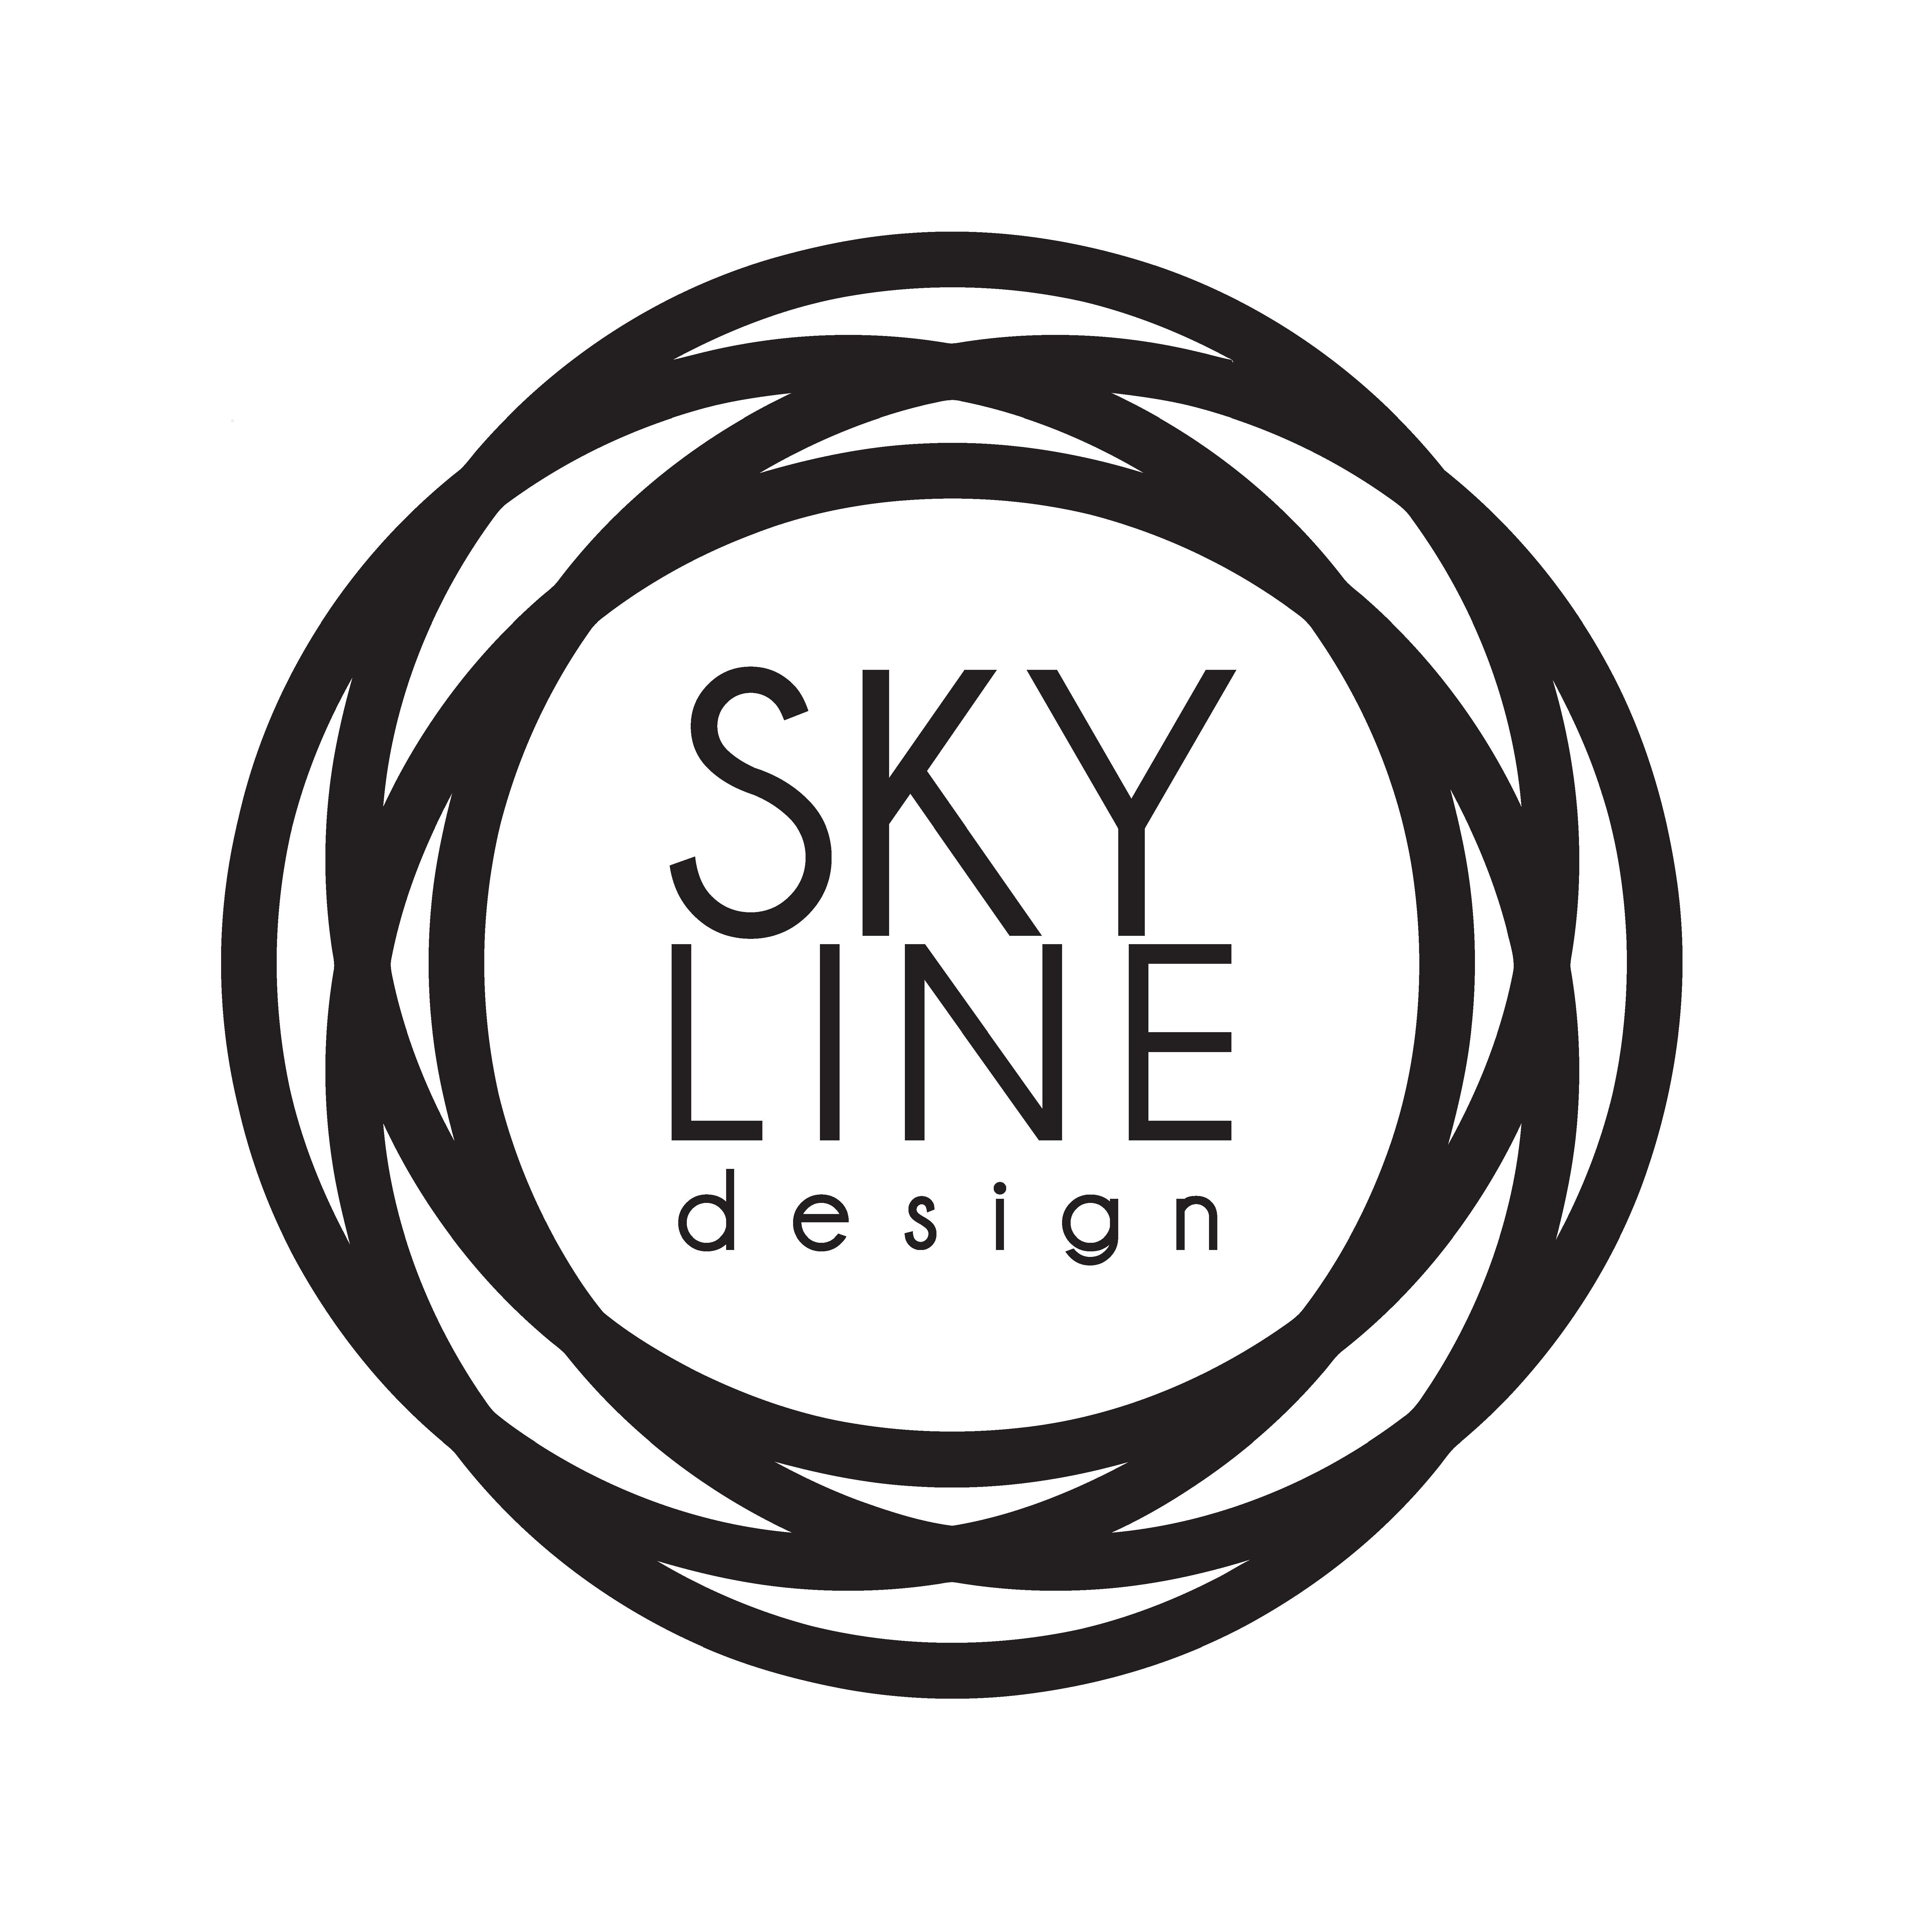 SKYLINE DESIGN logo 